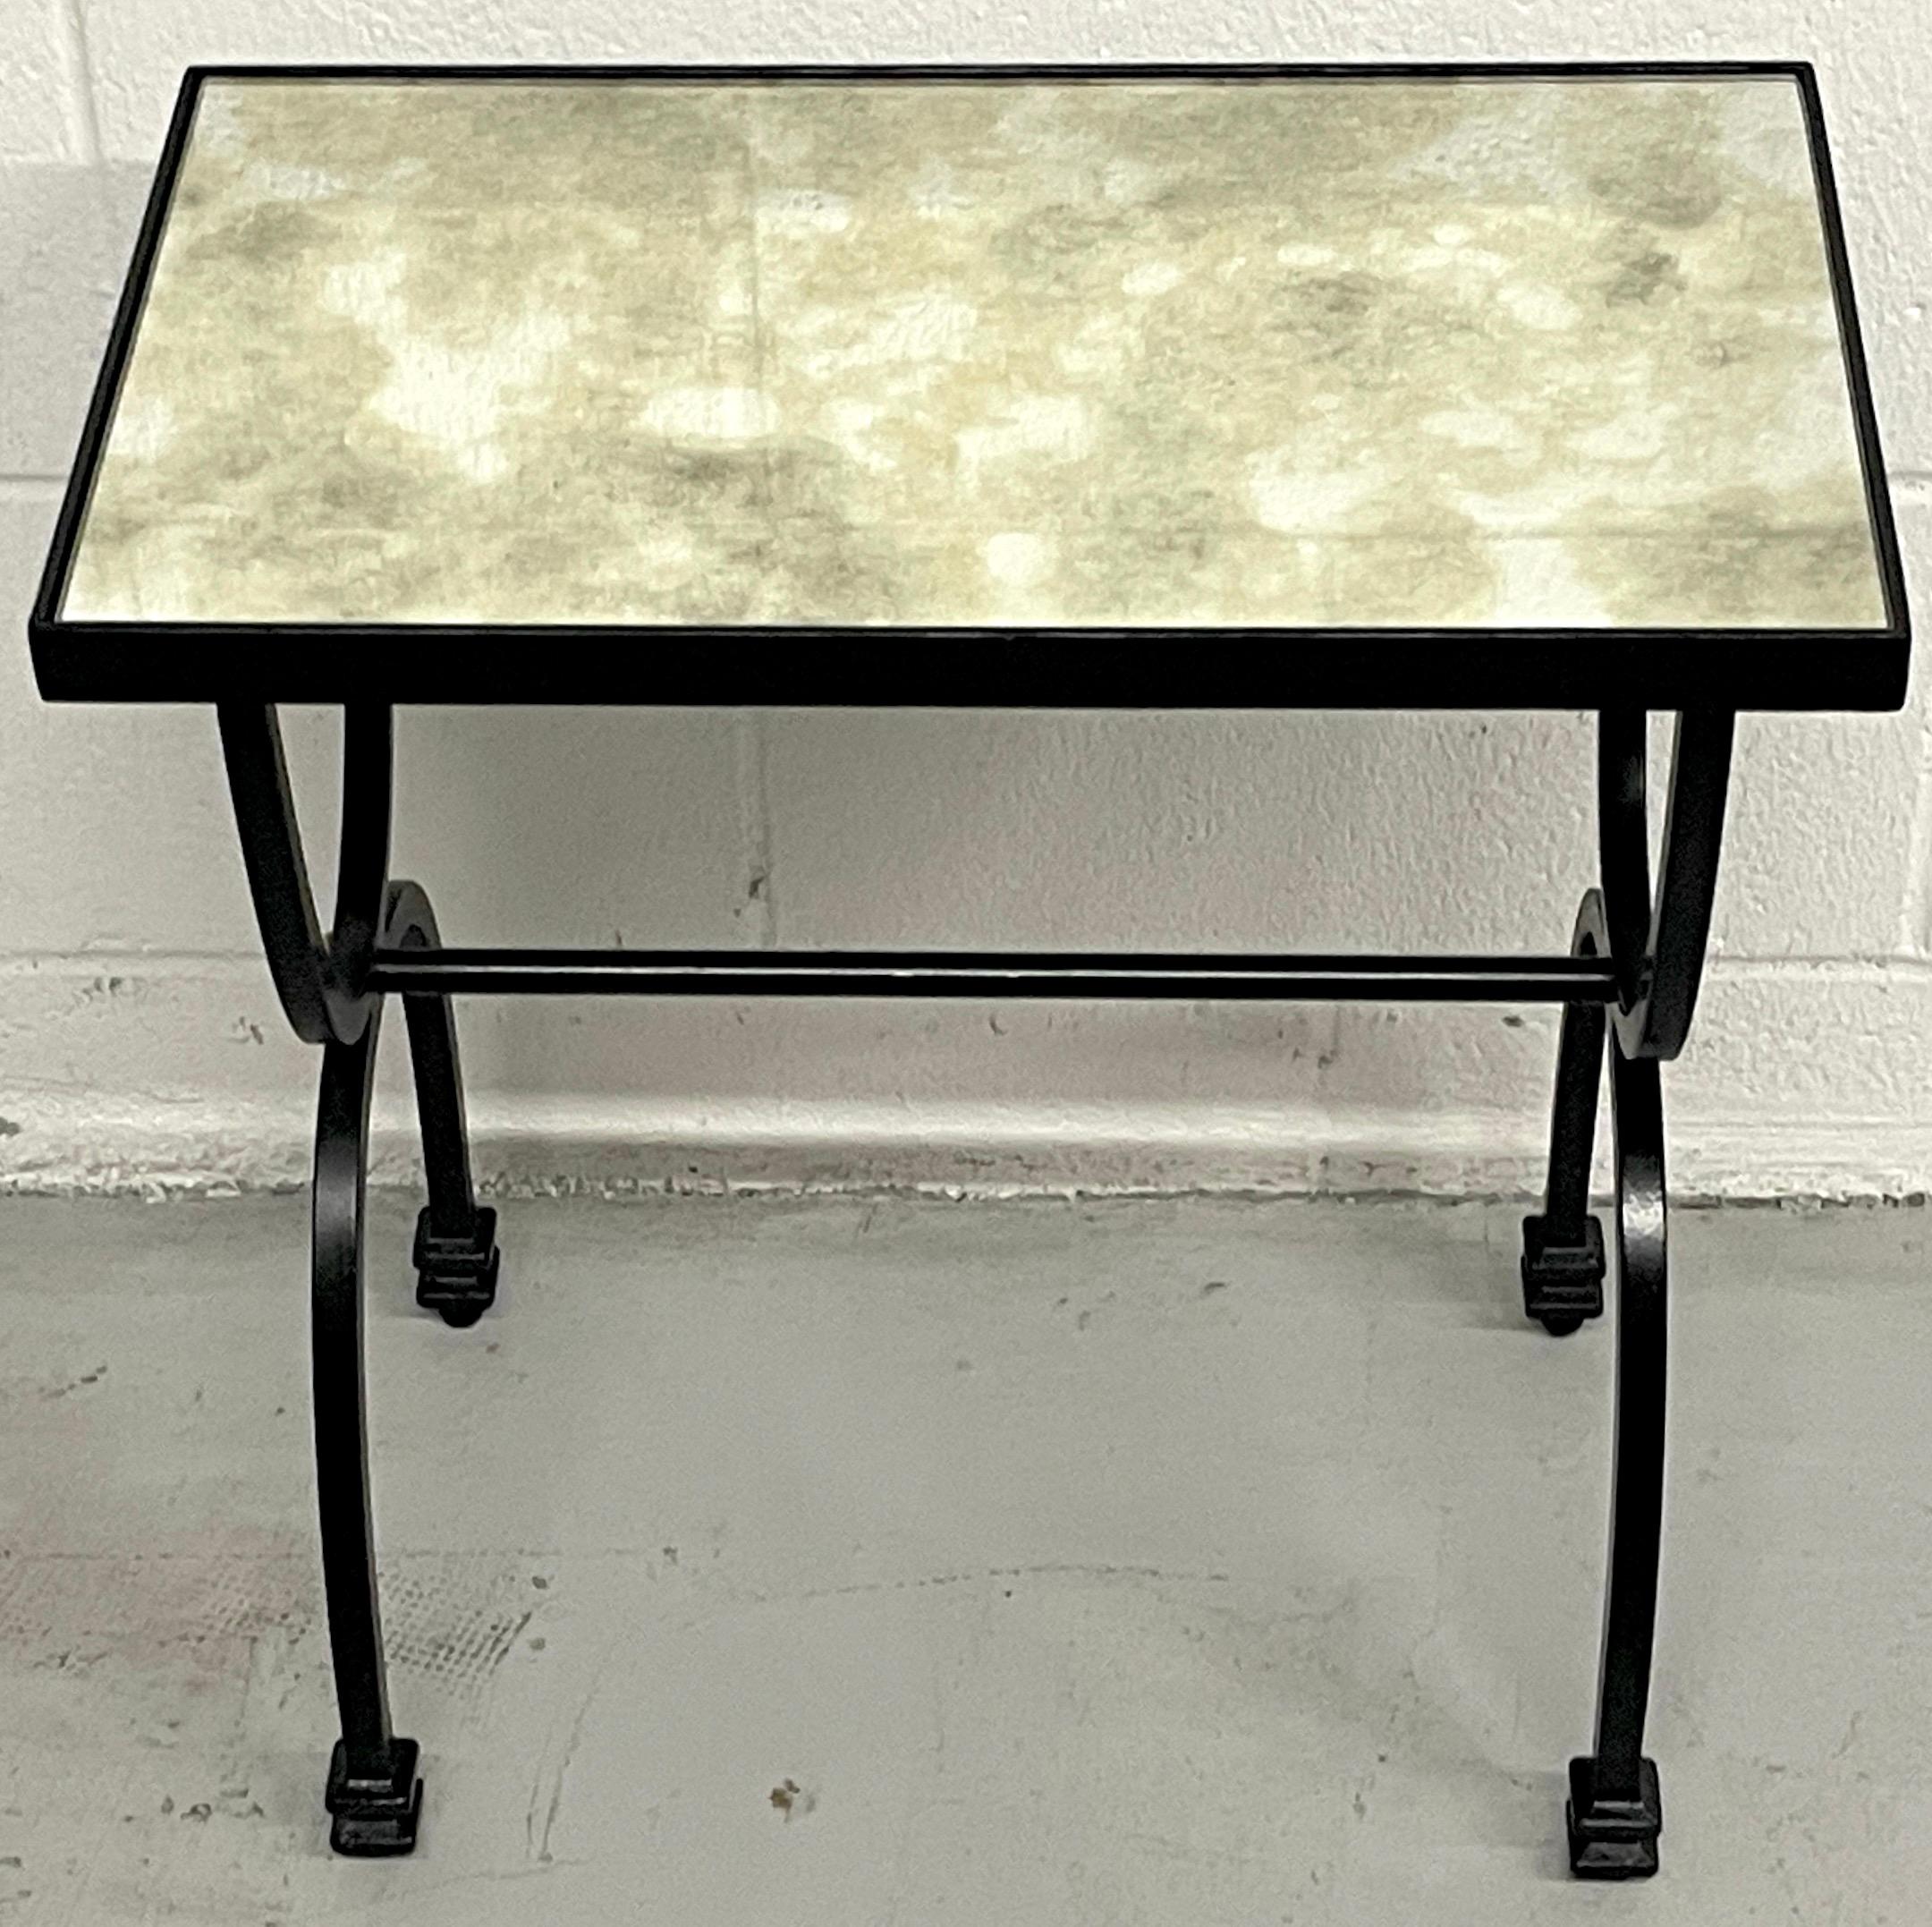 Blackened Diminutive French Modern Style Side Table, Style of Maison Jansen